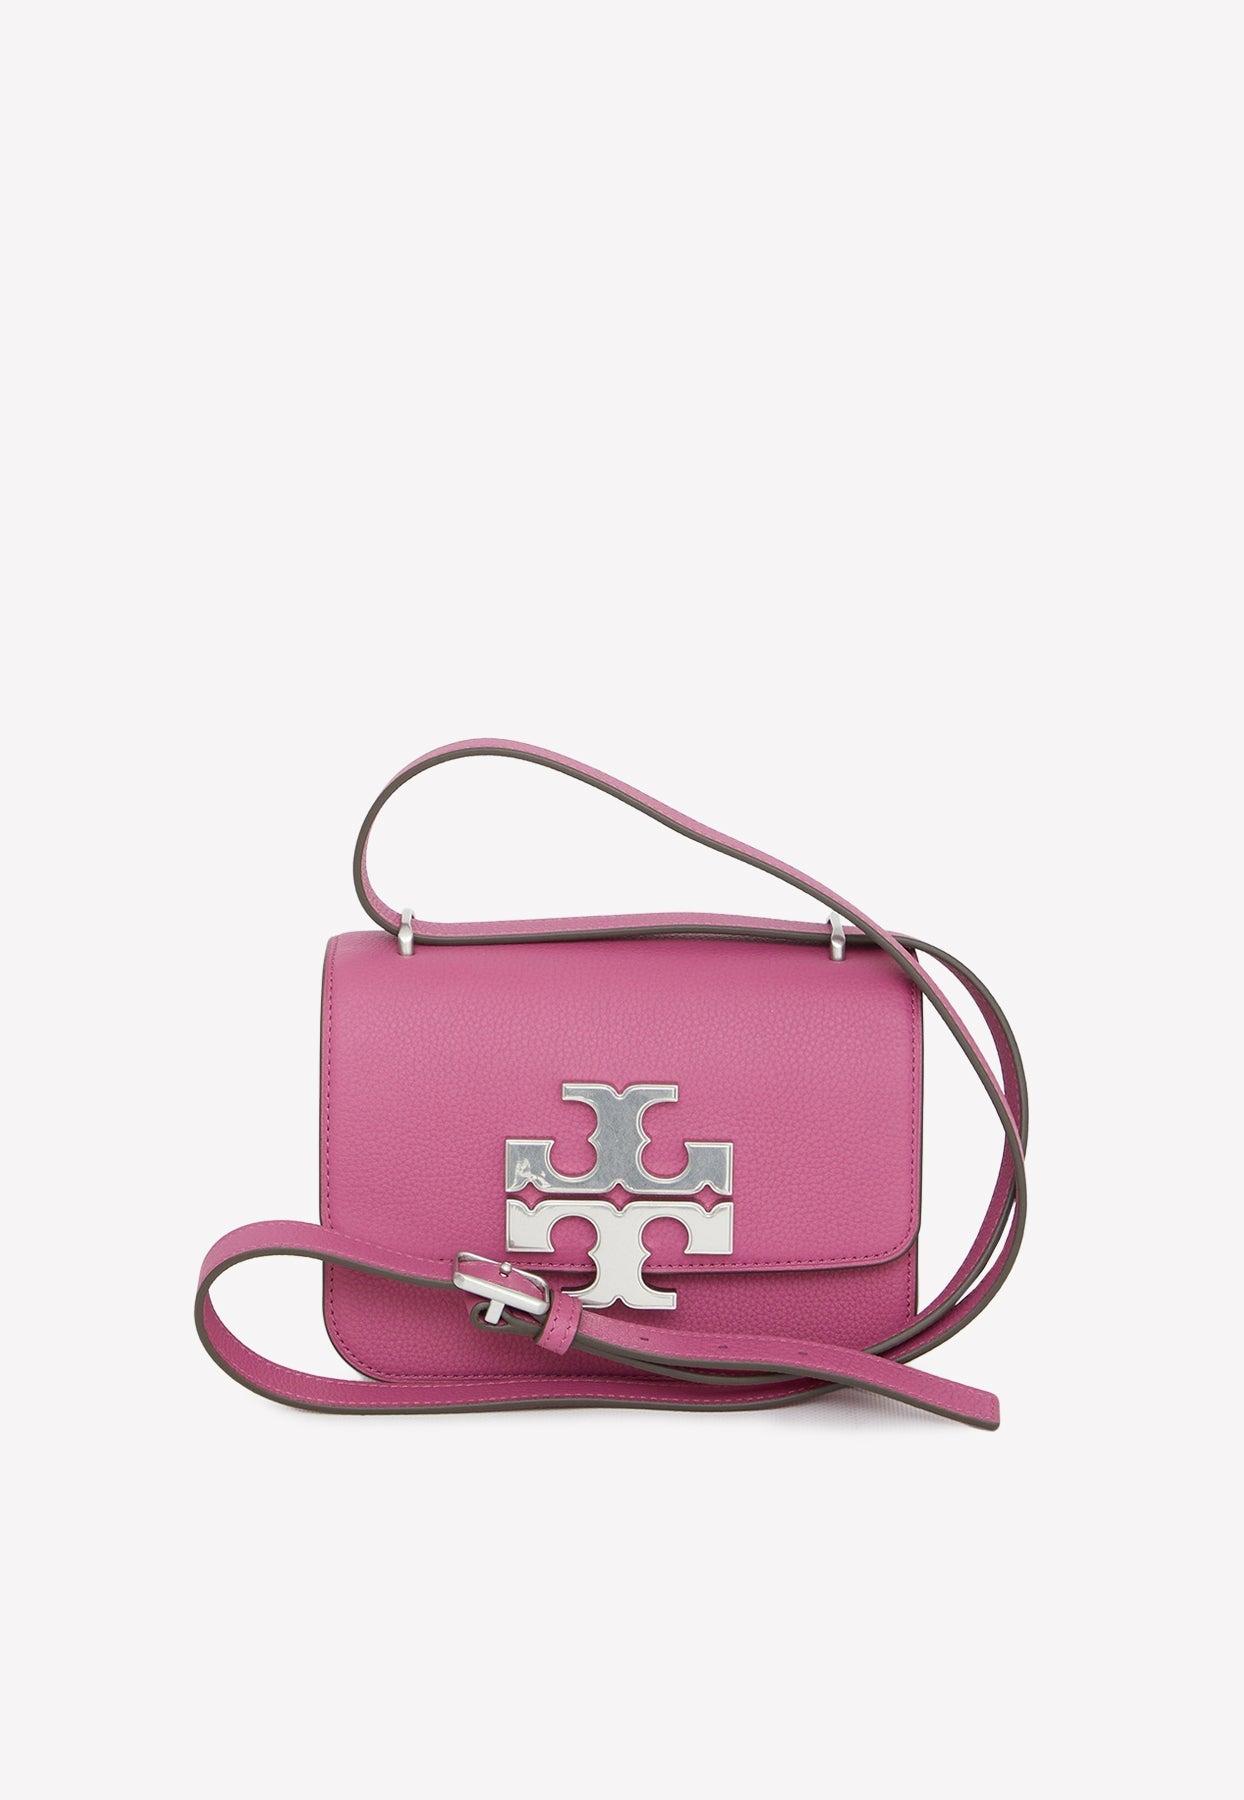 Tory Burch Mini Eleanor Pebbled Shoulder Bag in Pink | Lyst